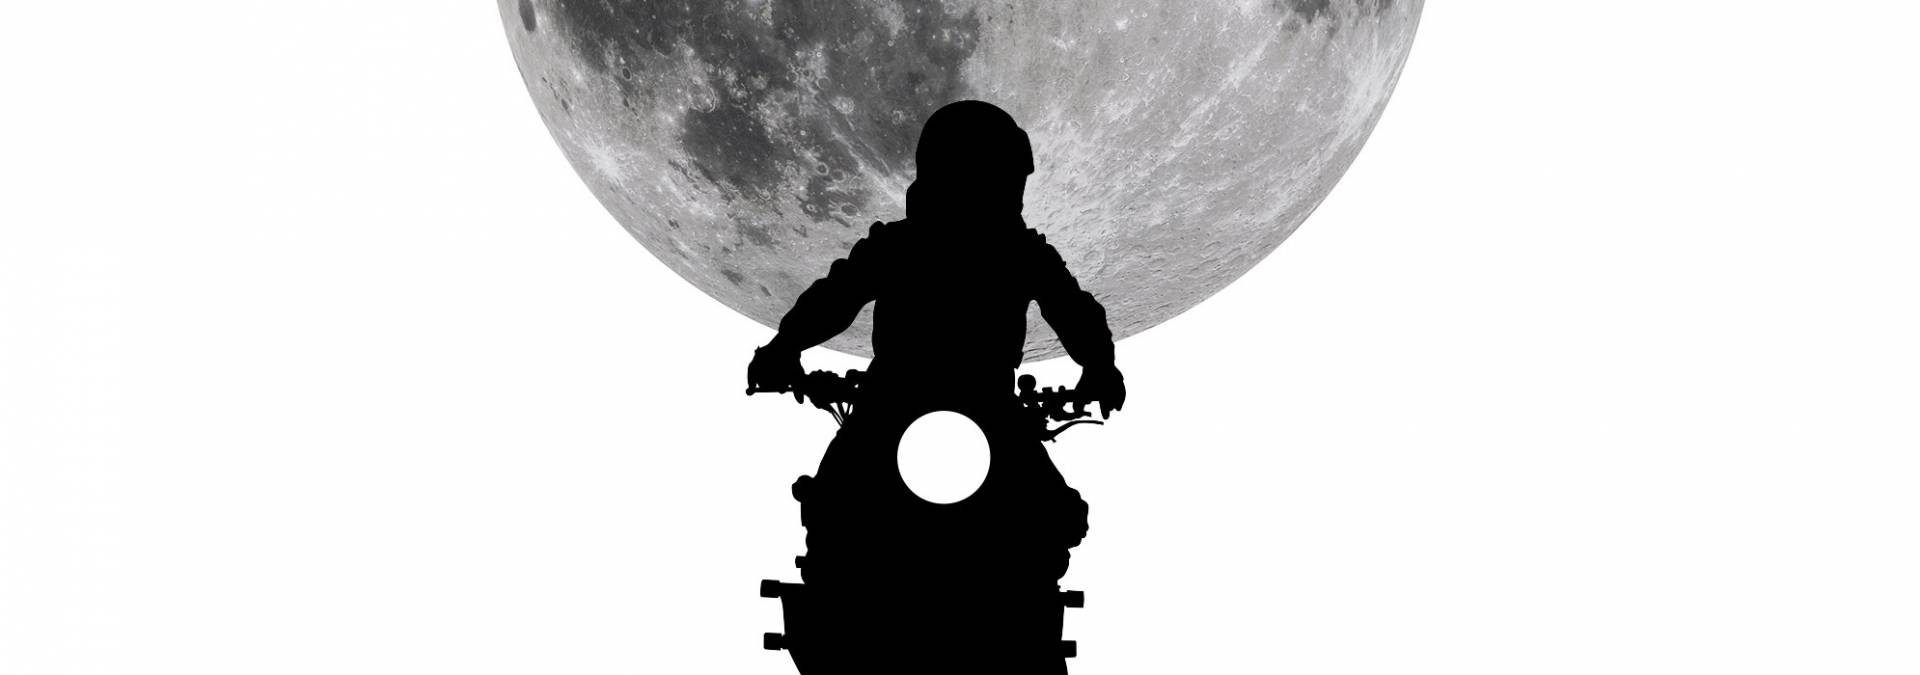 Motorbike and moon